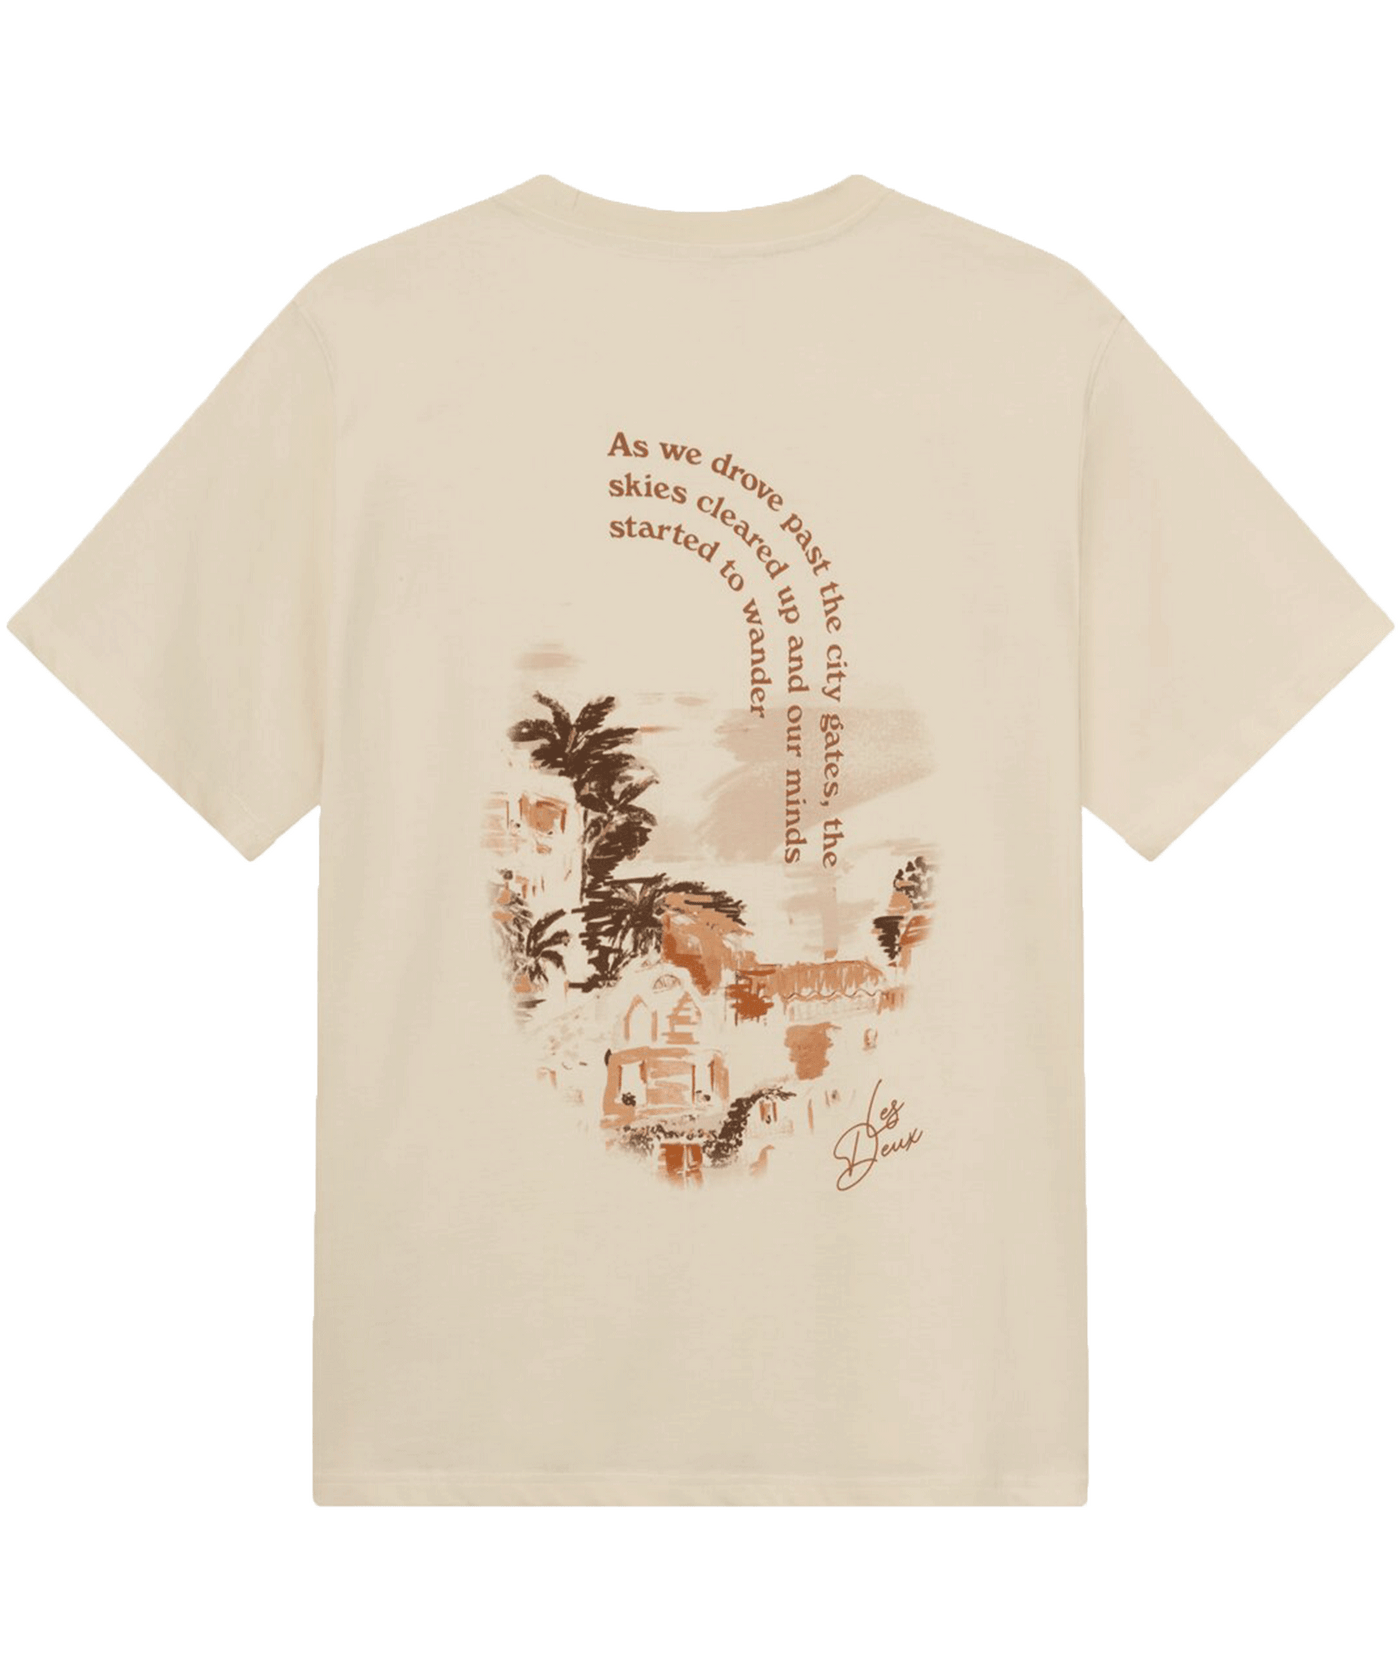 Les Deux - Ldm101160 - Coastal T-shirt - Ivory